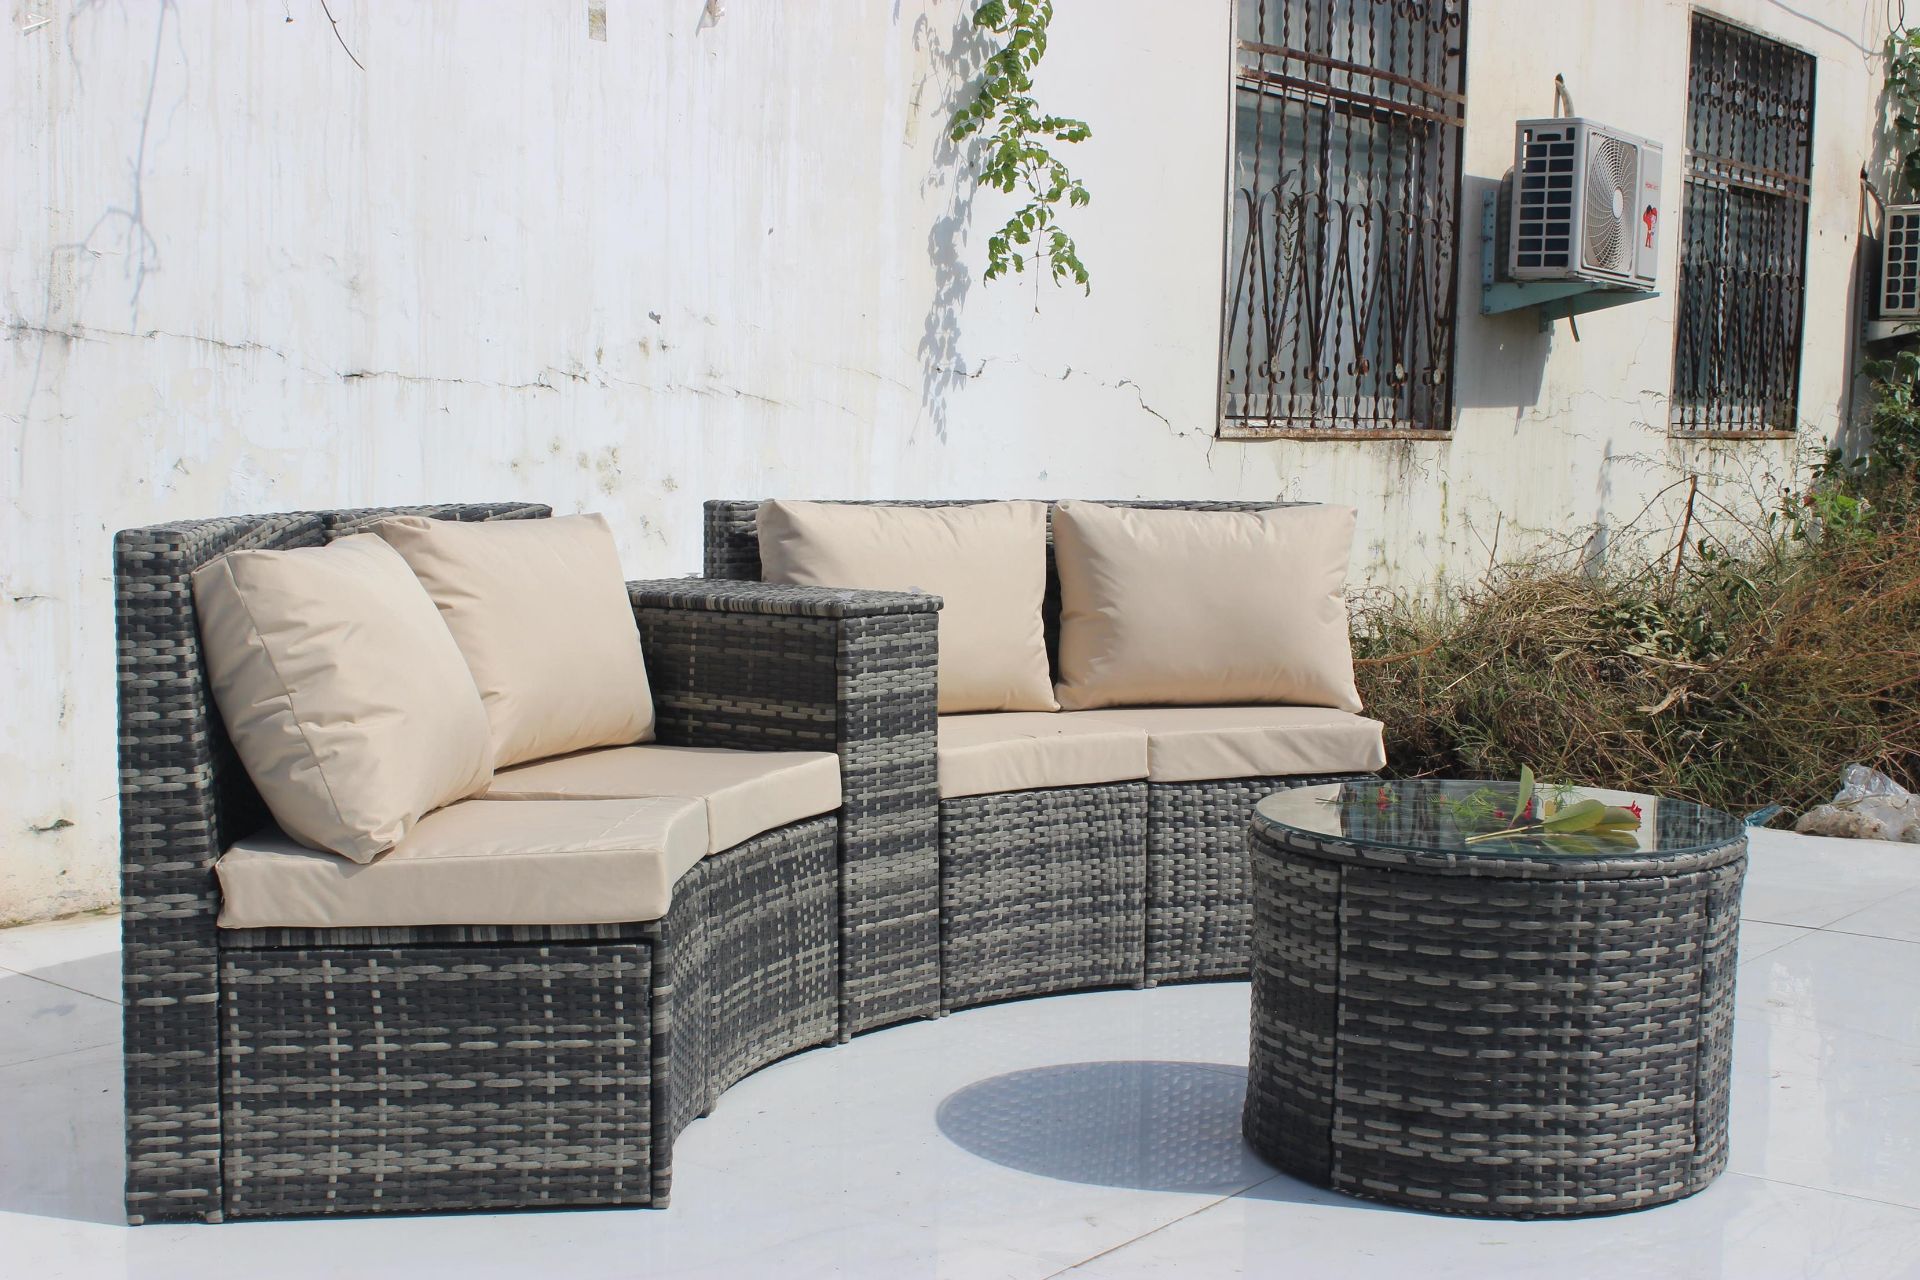 + VAT Brand New Chelsea Garden Company Light Brown Semi Circular Sofa Set With Circular Table - - Image 4 of 4